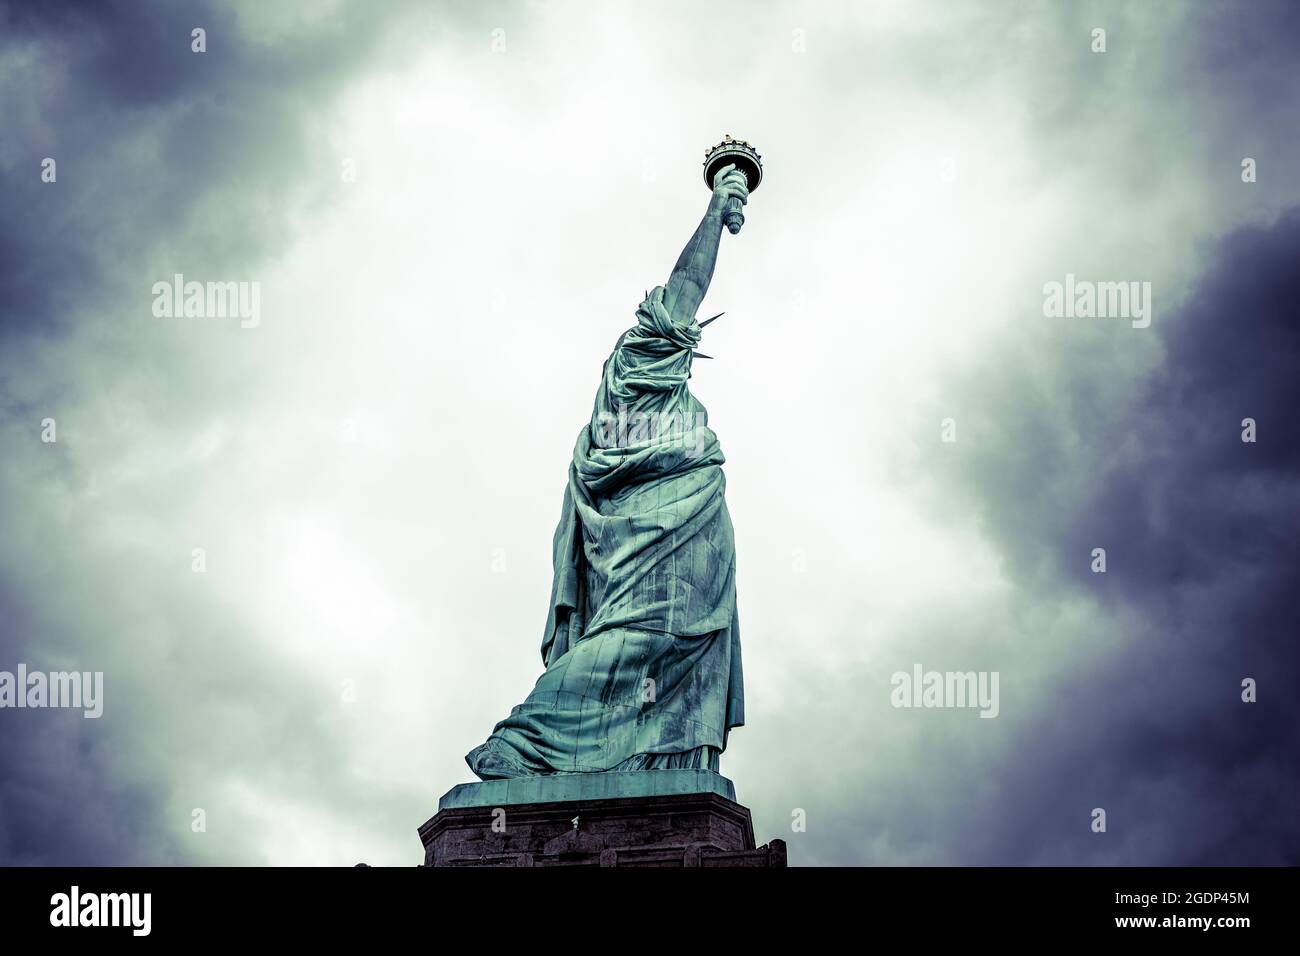 Walking around the Statue of liberty Stock Photo